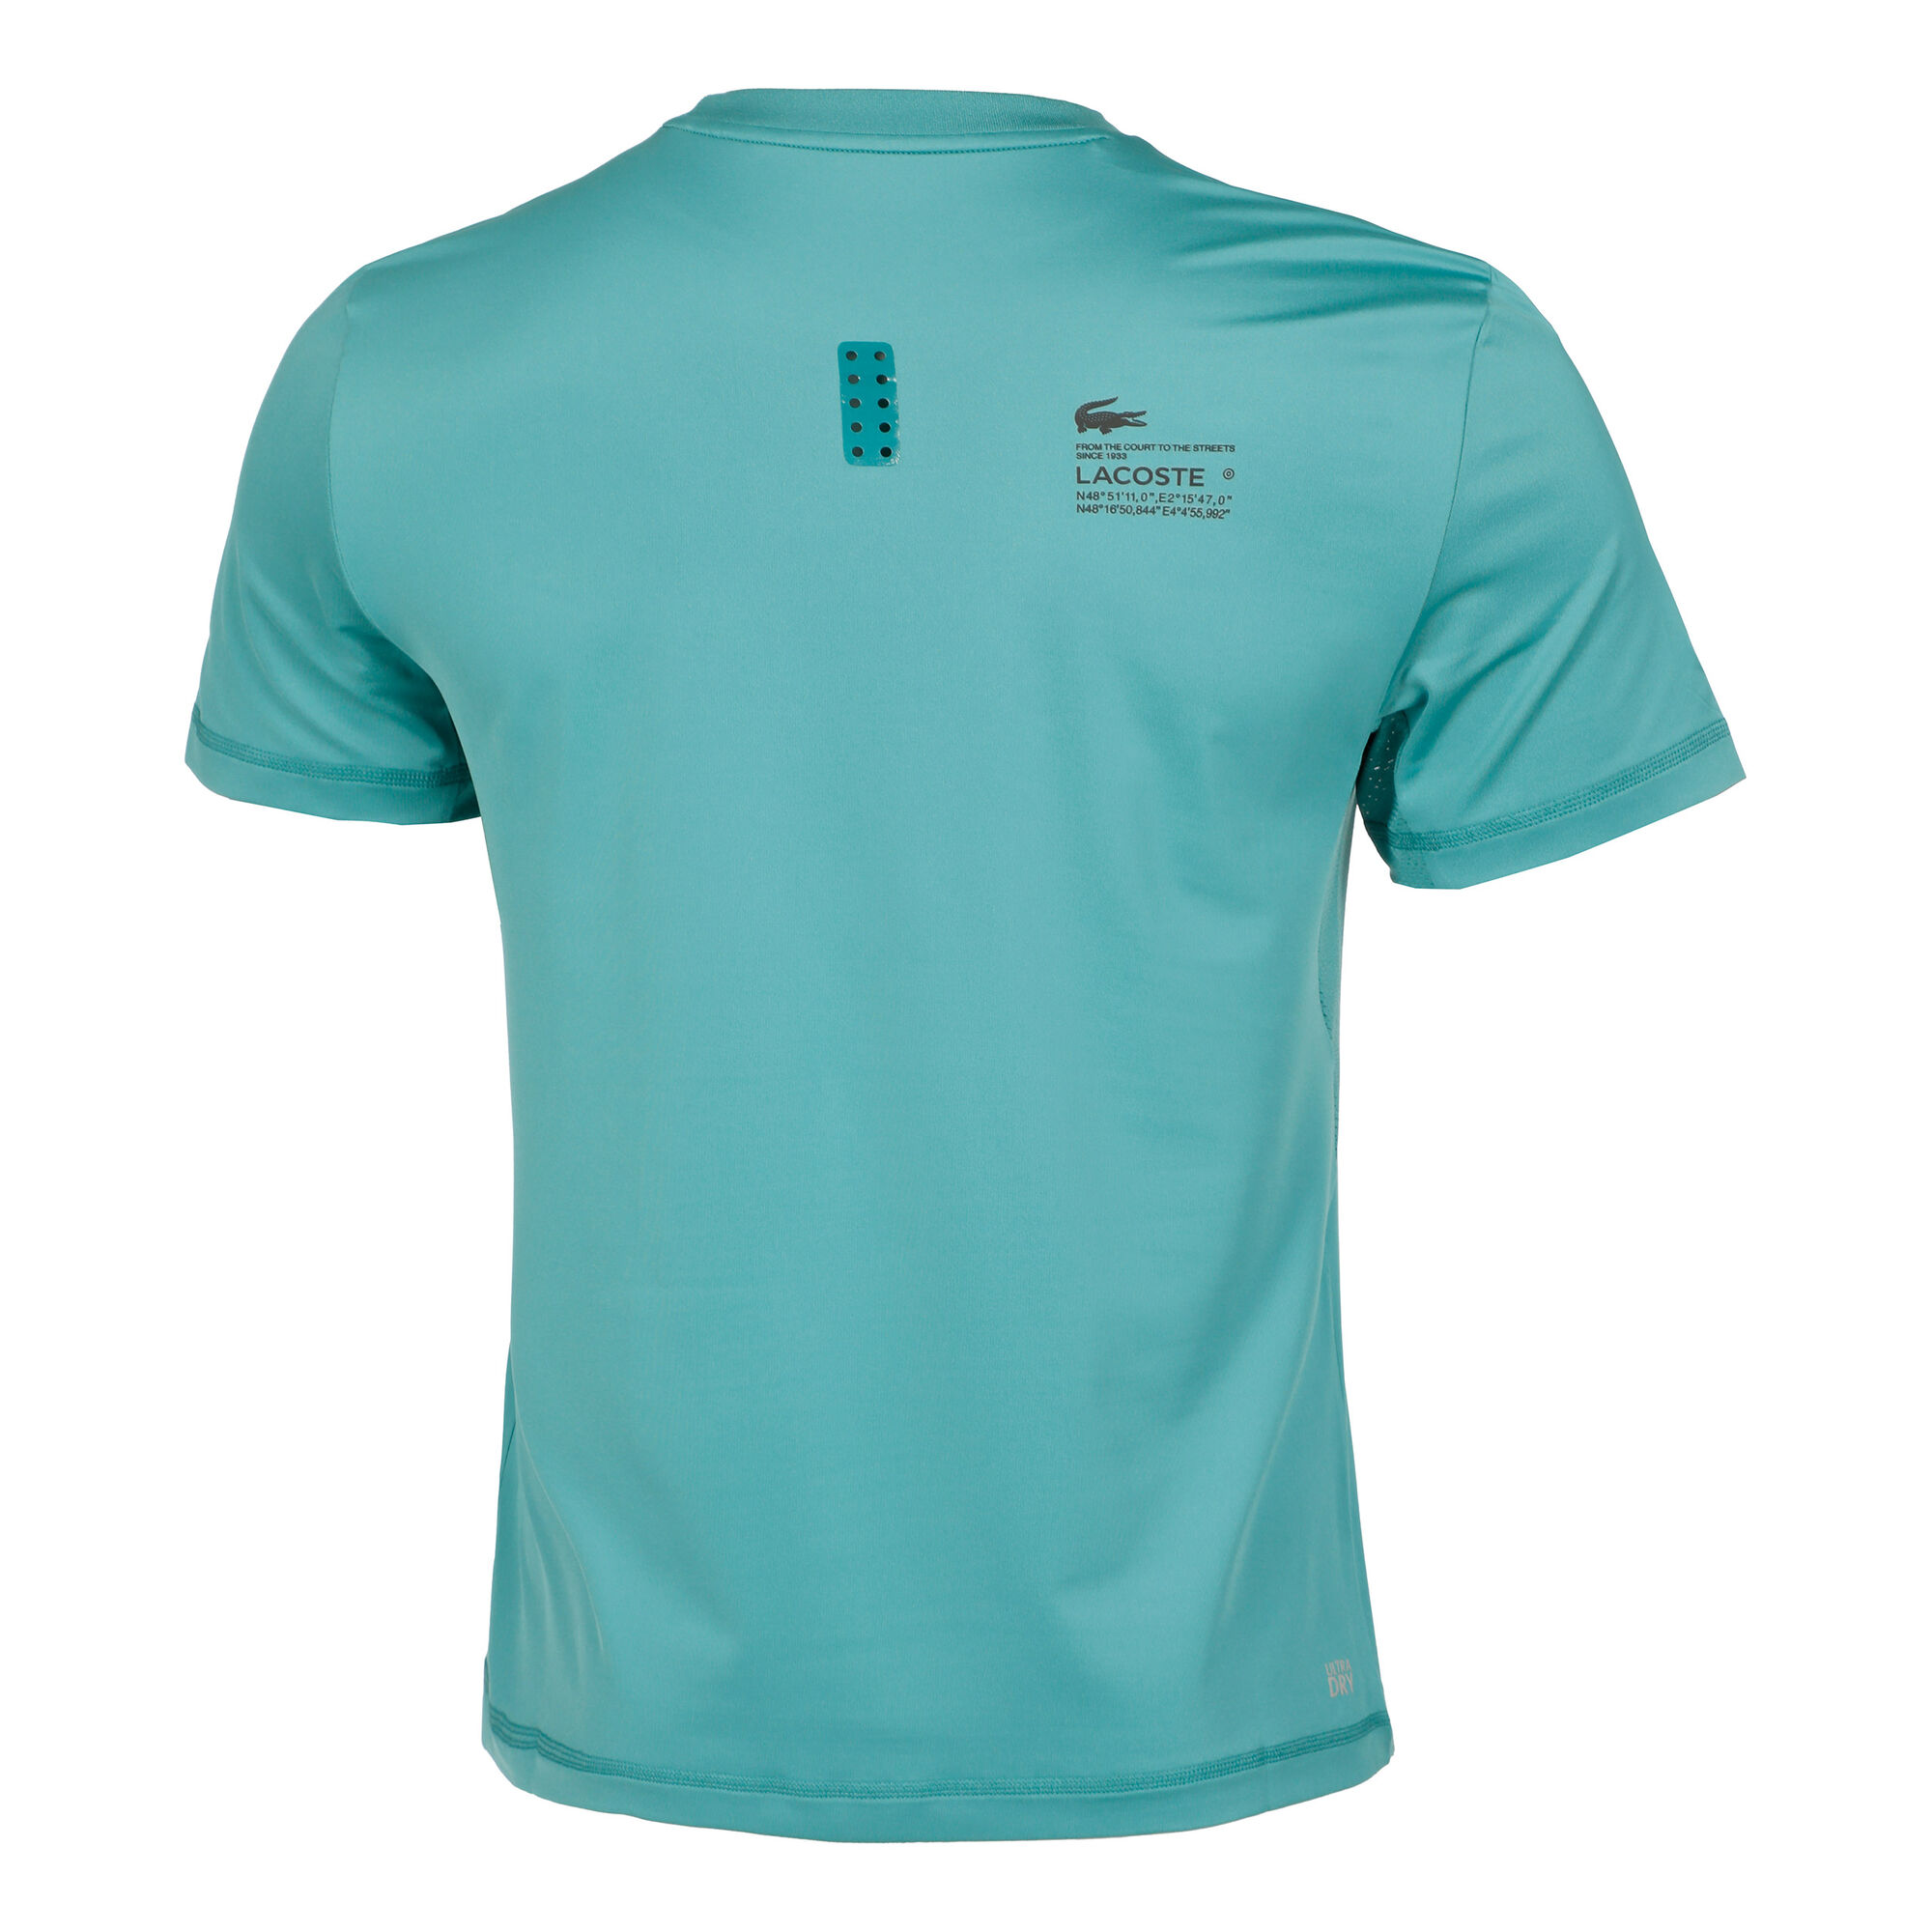 Fil overførsel syre buy Lacoste Active T-Shirt Men - Petrol online | Tennis-Point